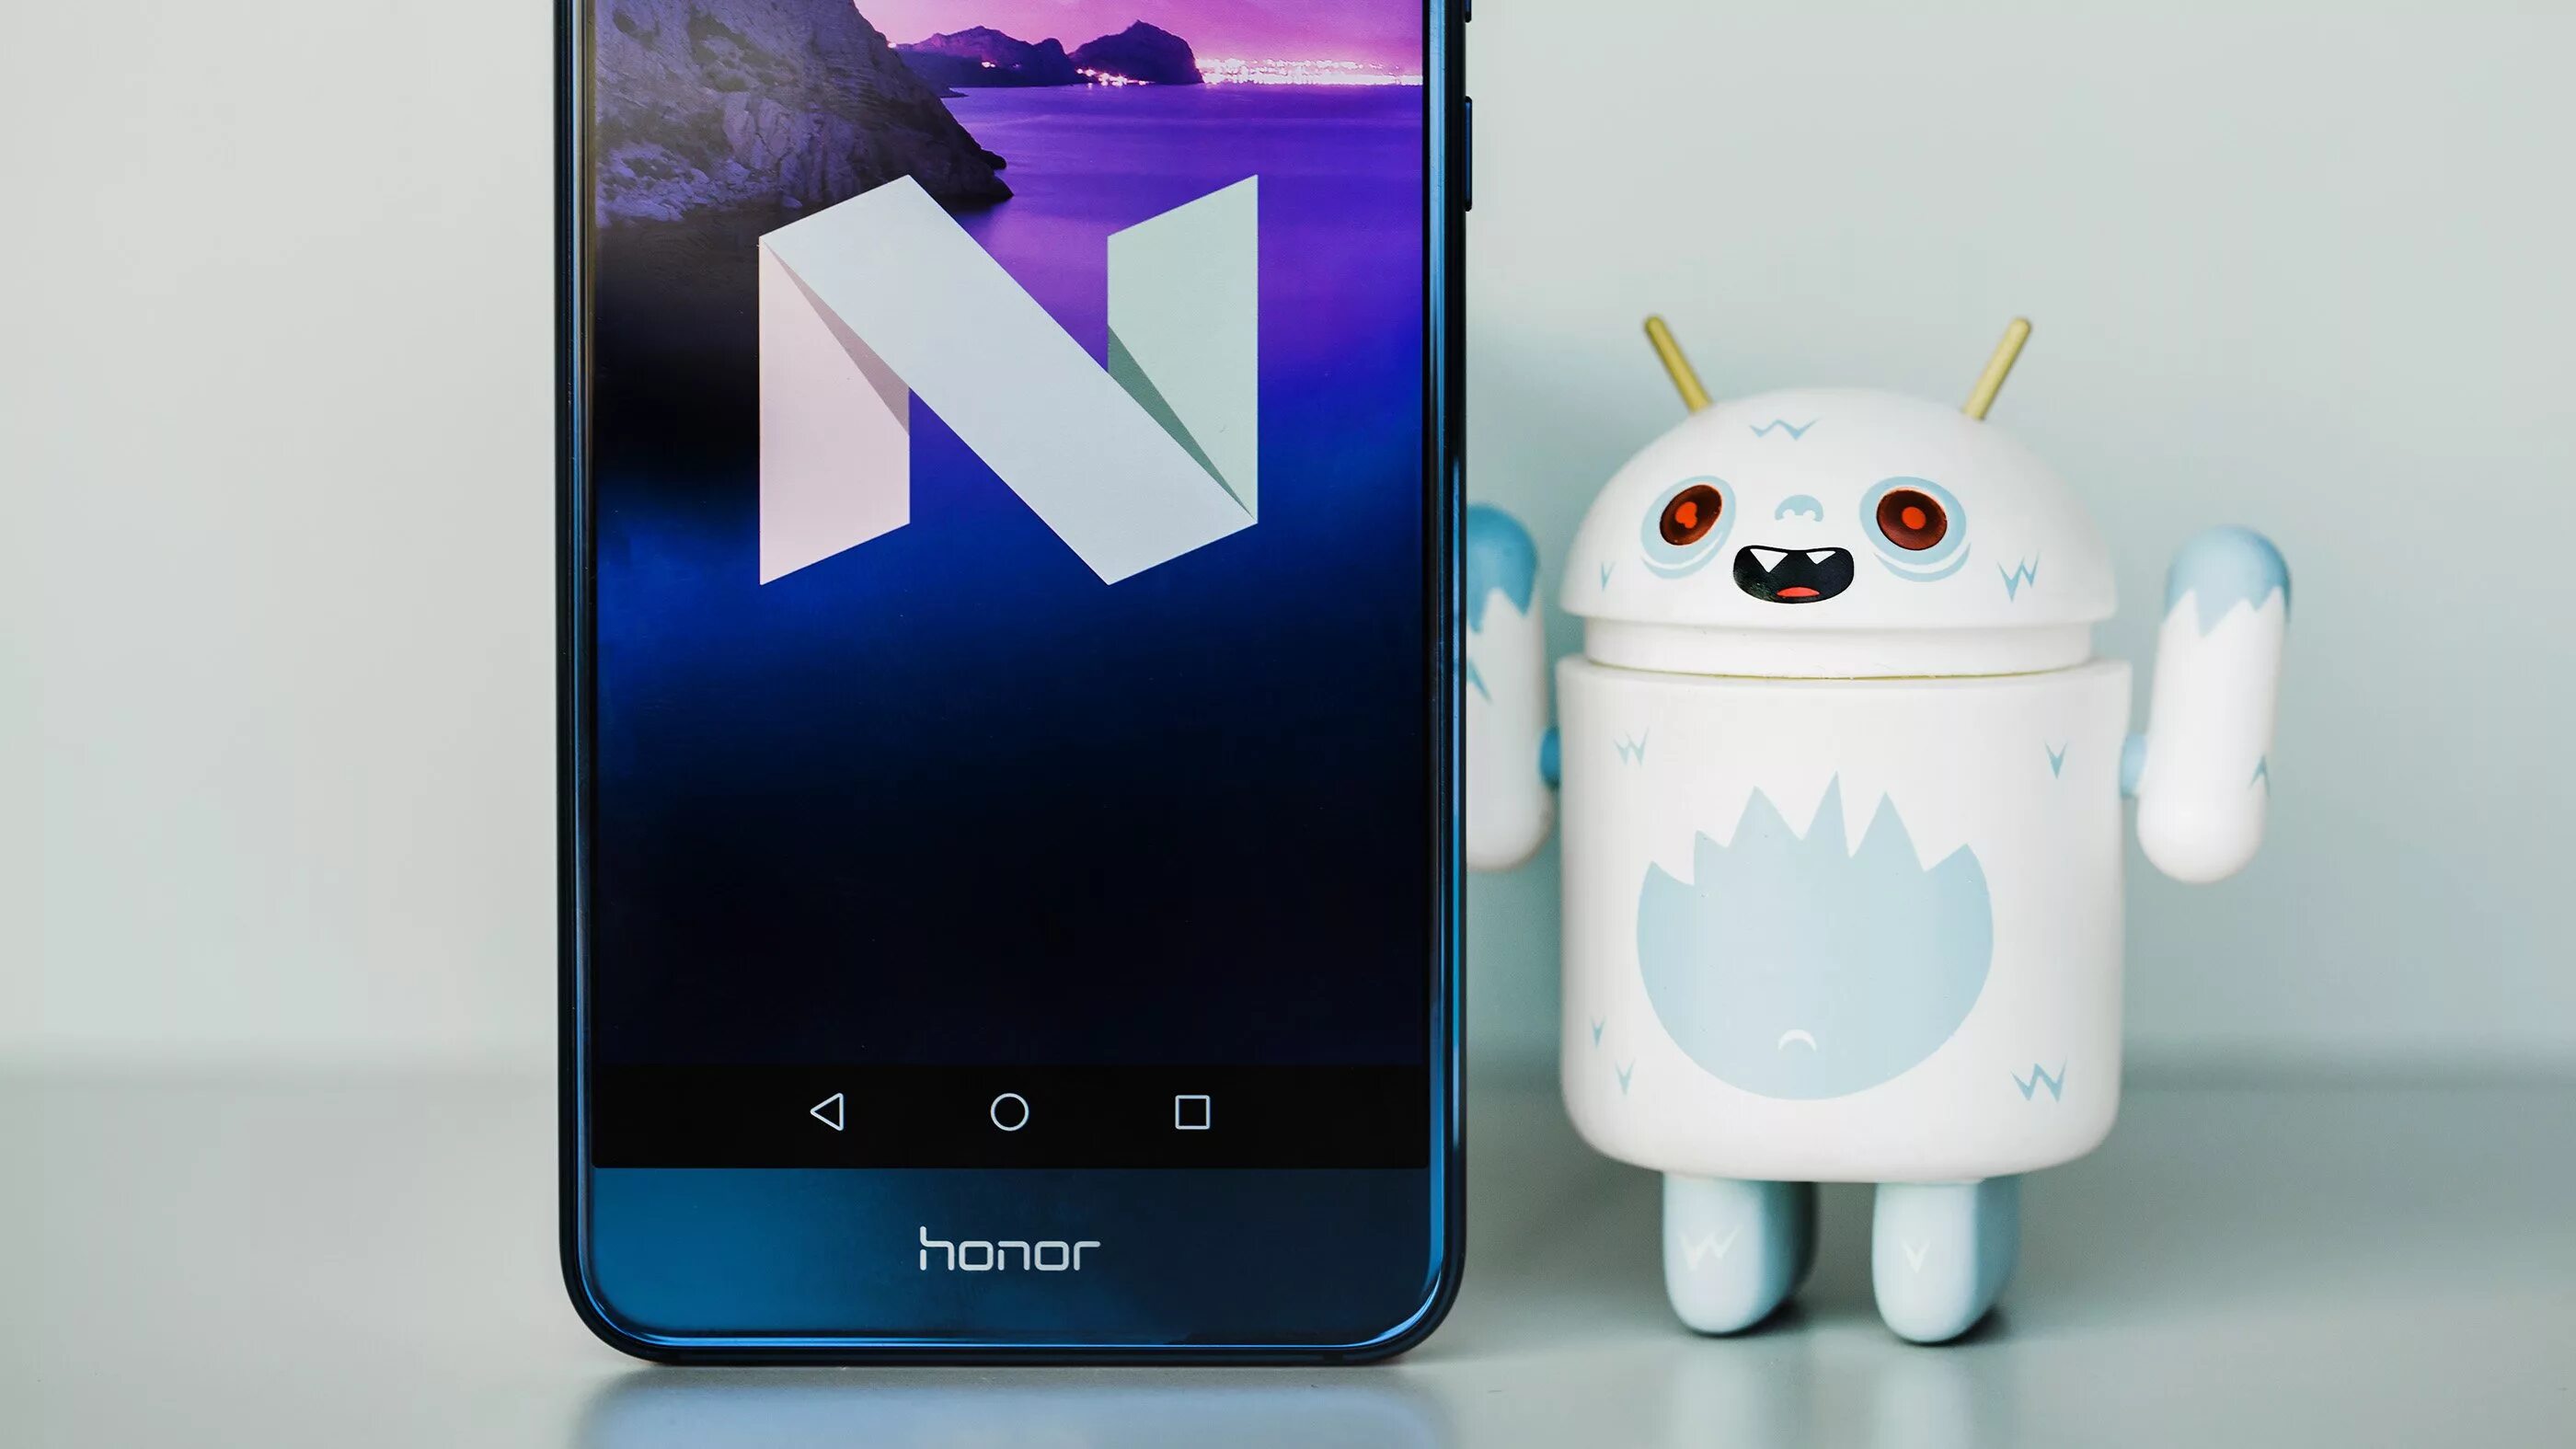 Новый android 8. Андроид 7. Android Nougat. Honor 8 Android 8. Хонор андроид 6.0.